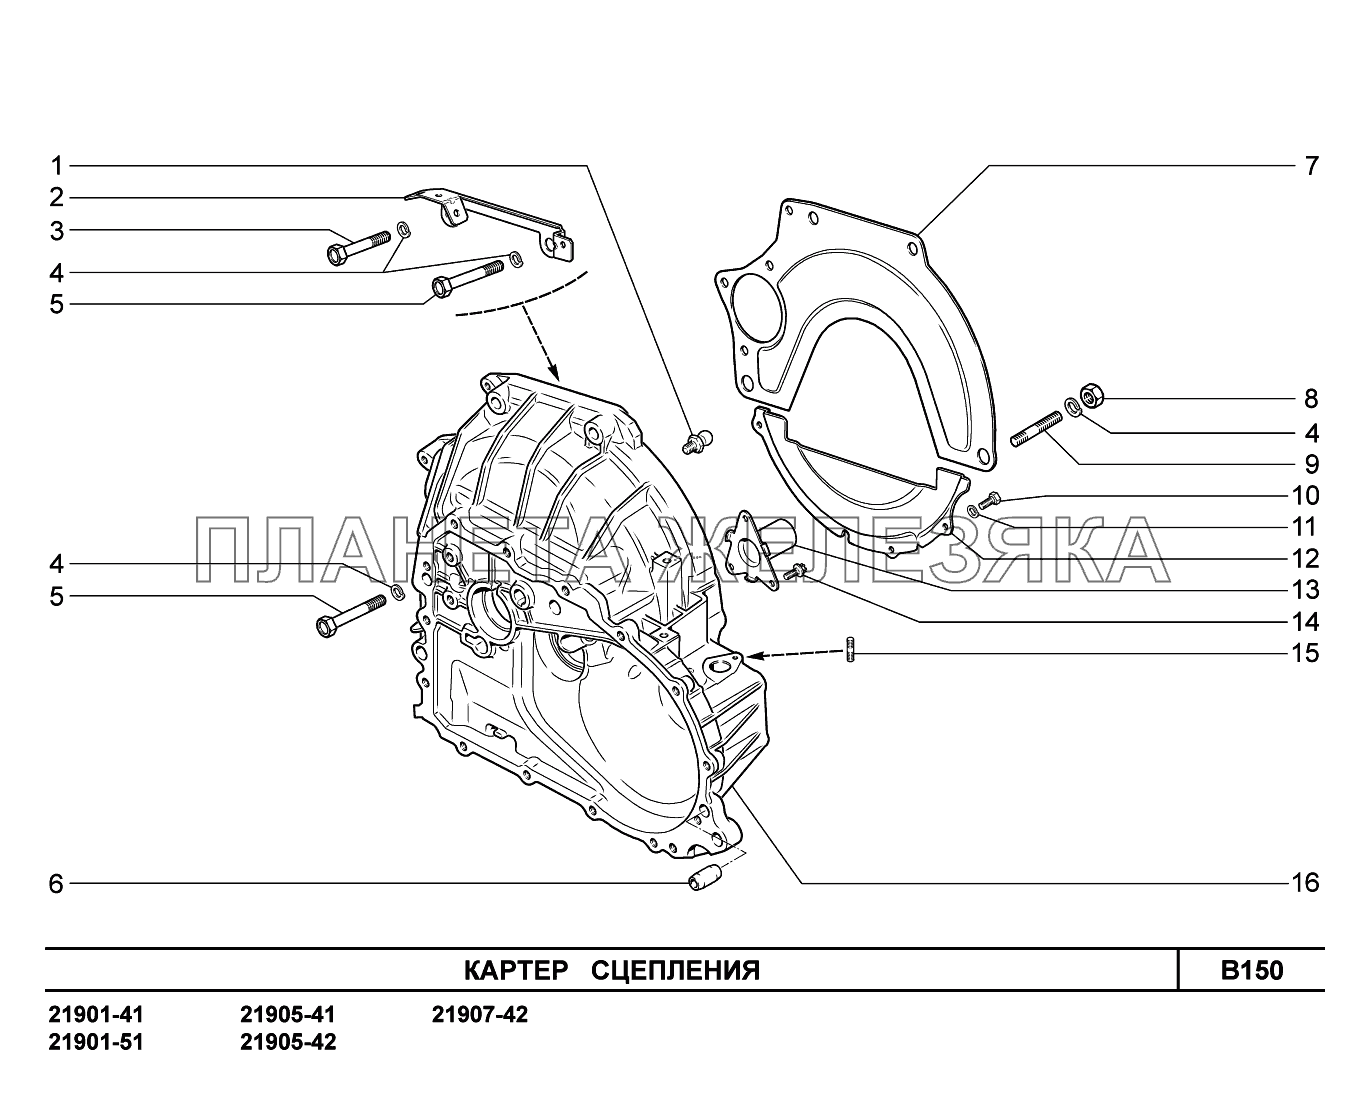 B150. Картер сцепления Lada Granta-2190